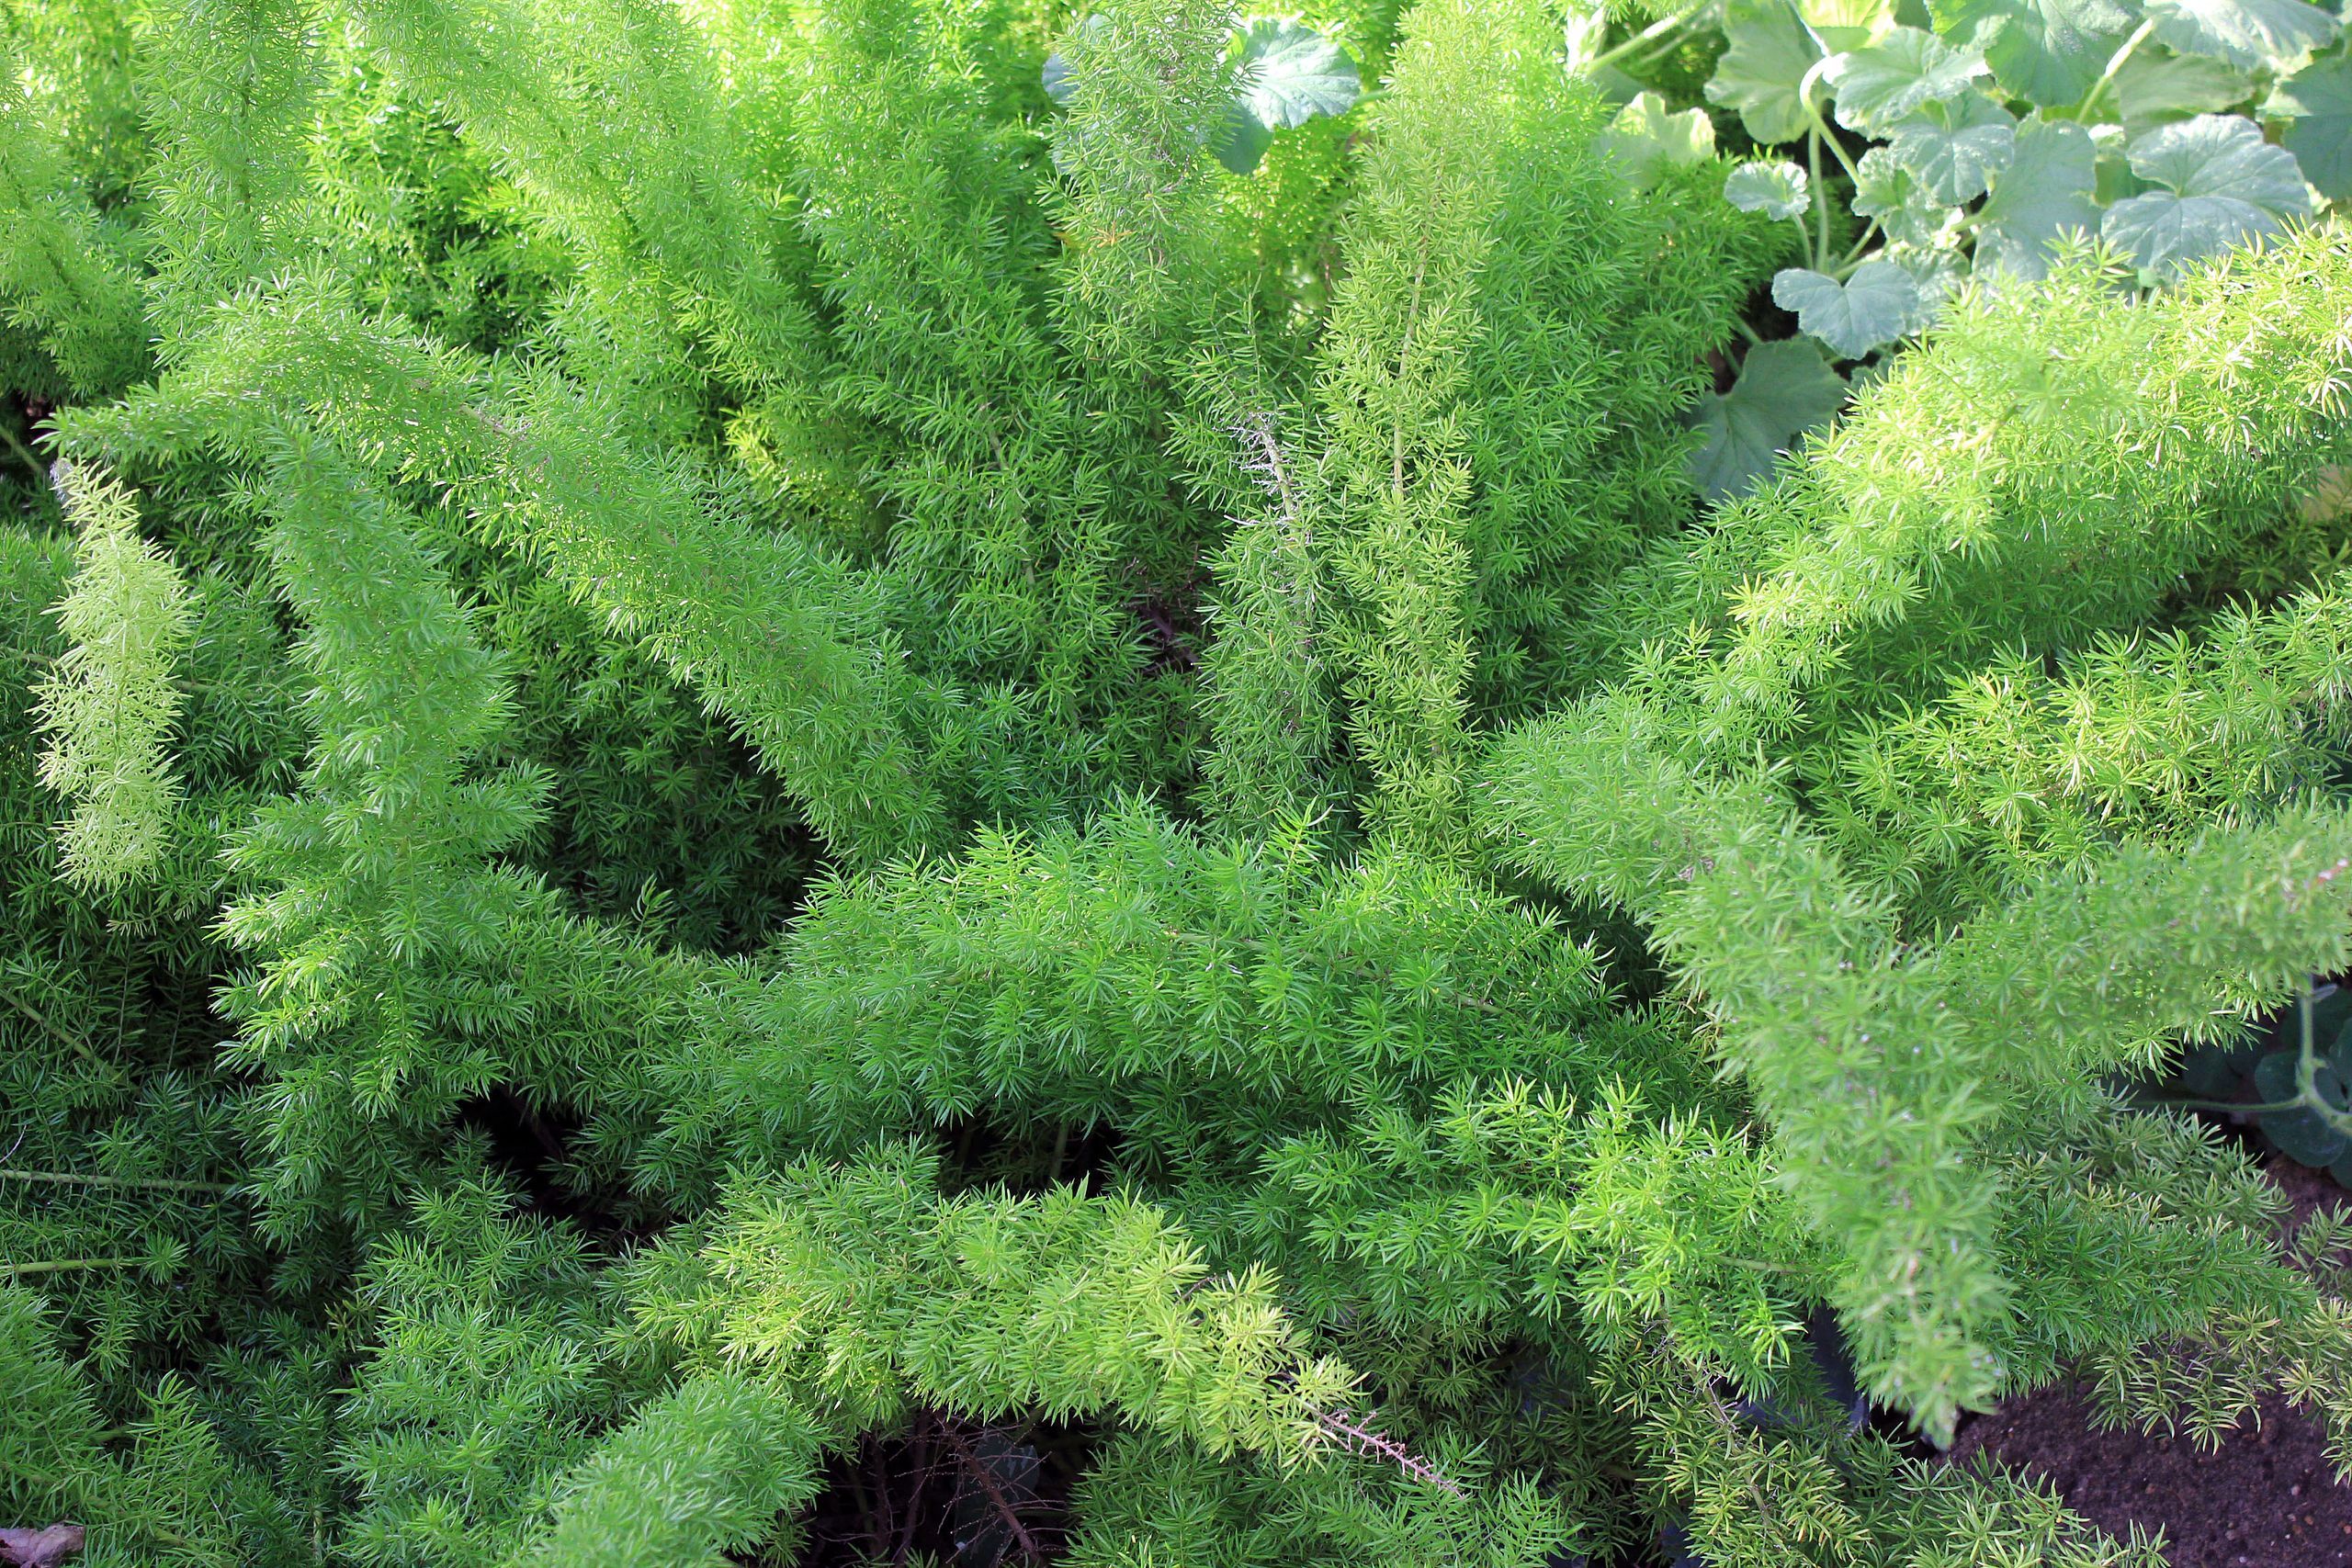 File:Gfp-asparagus-fern.jpg - Wikimedia Commons